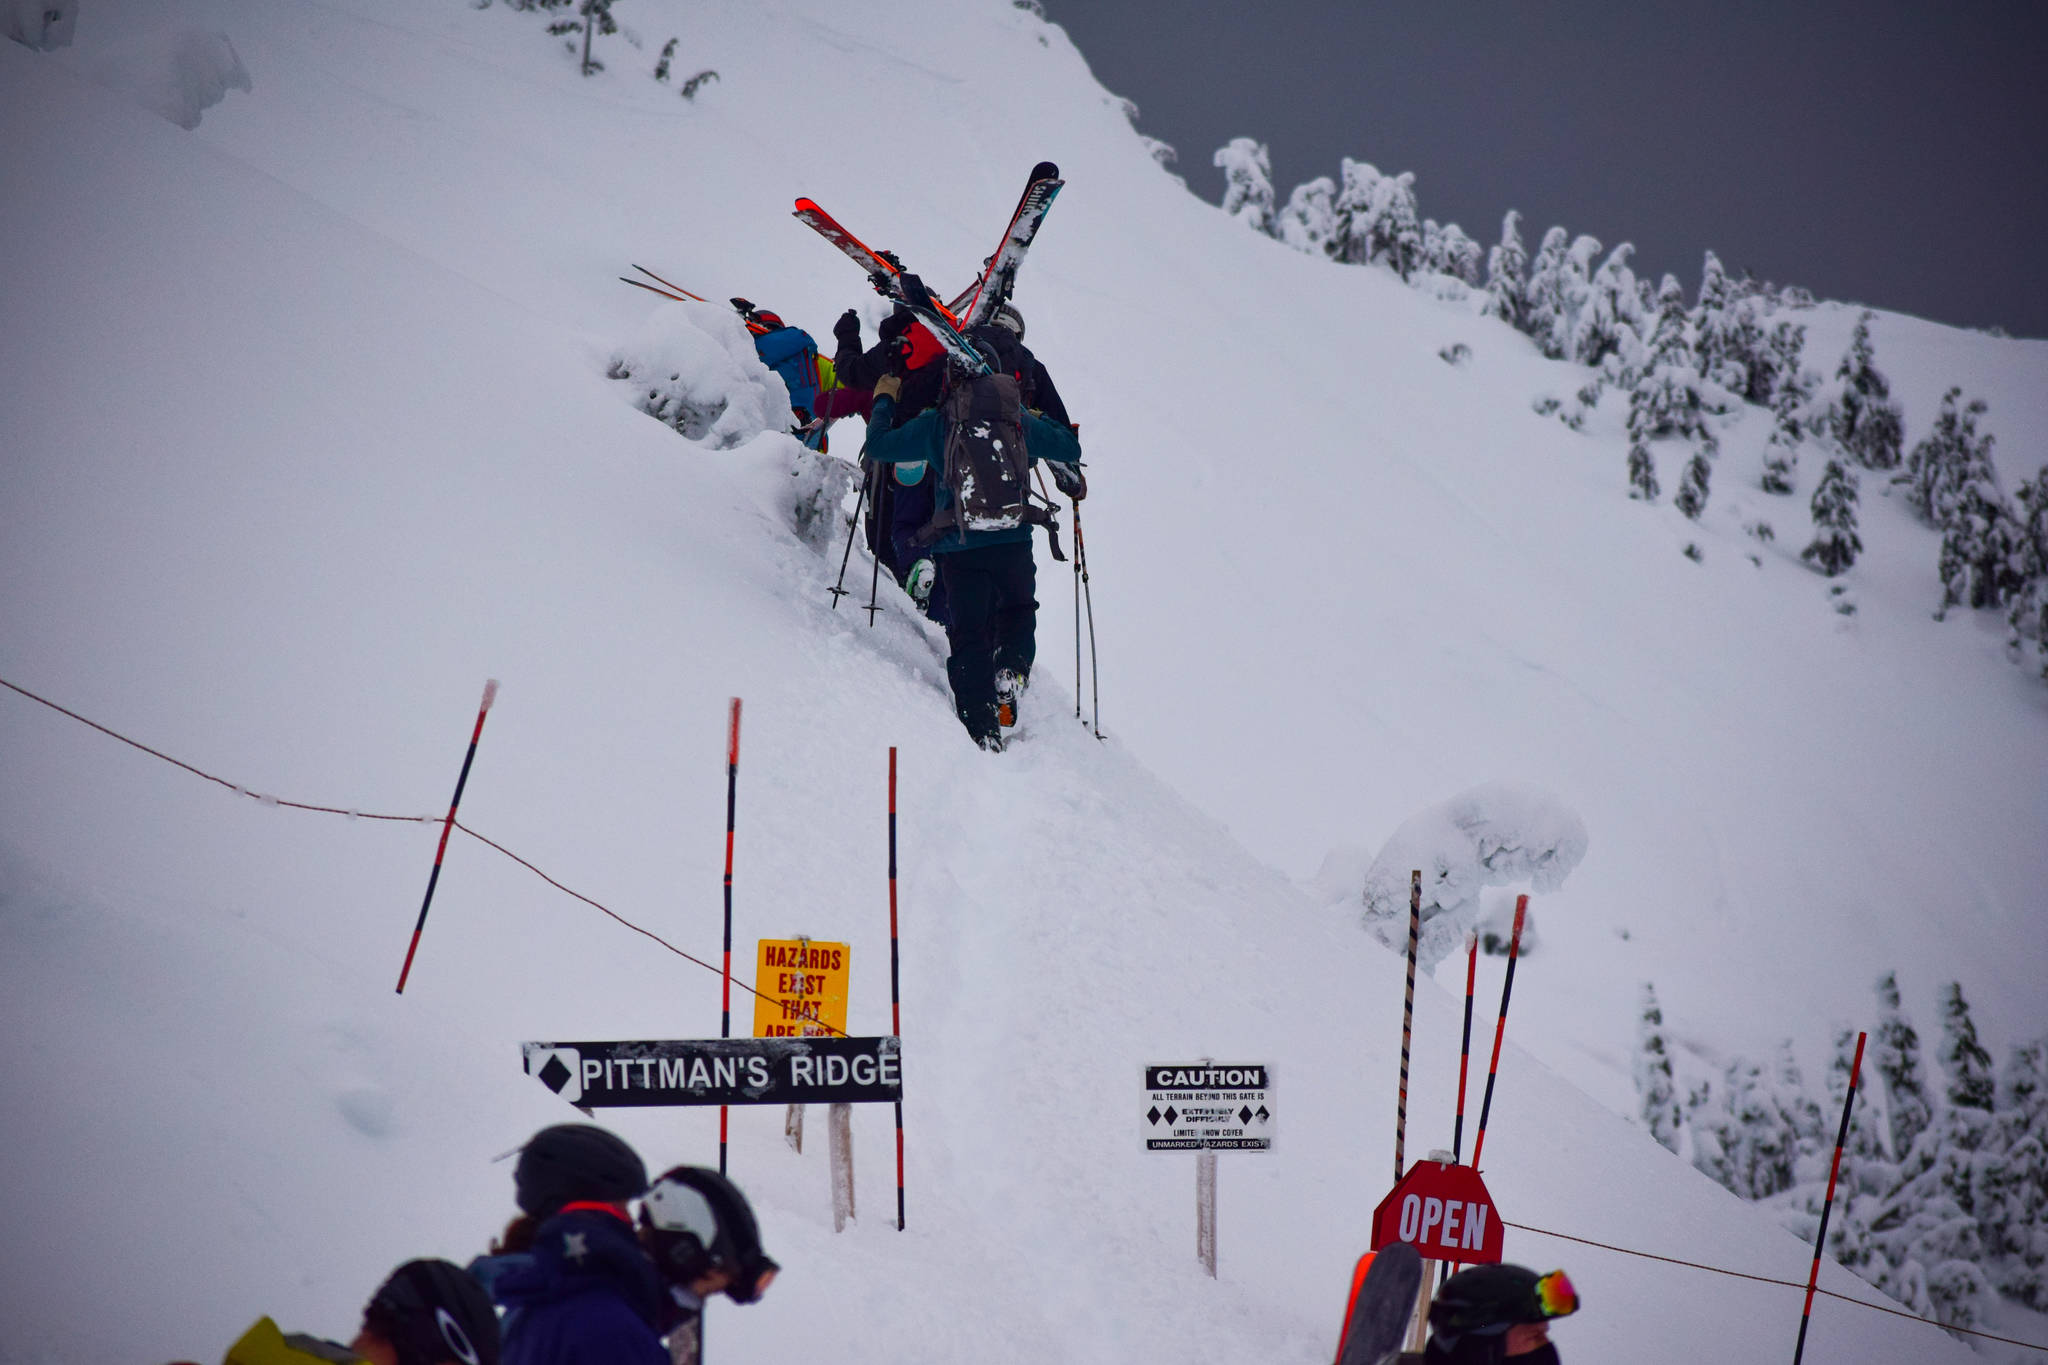 Winter sports enthusiasts set up for a run at Eaglecrest Ski Area. (Eaglecrest Ski Area)